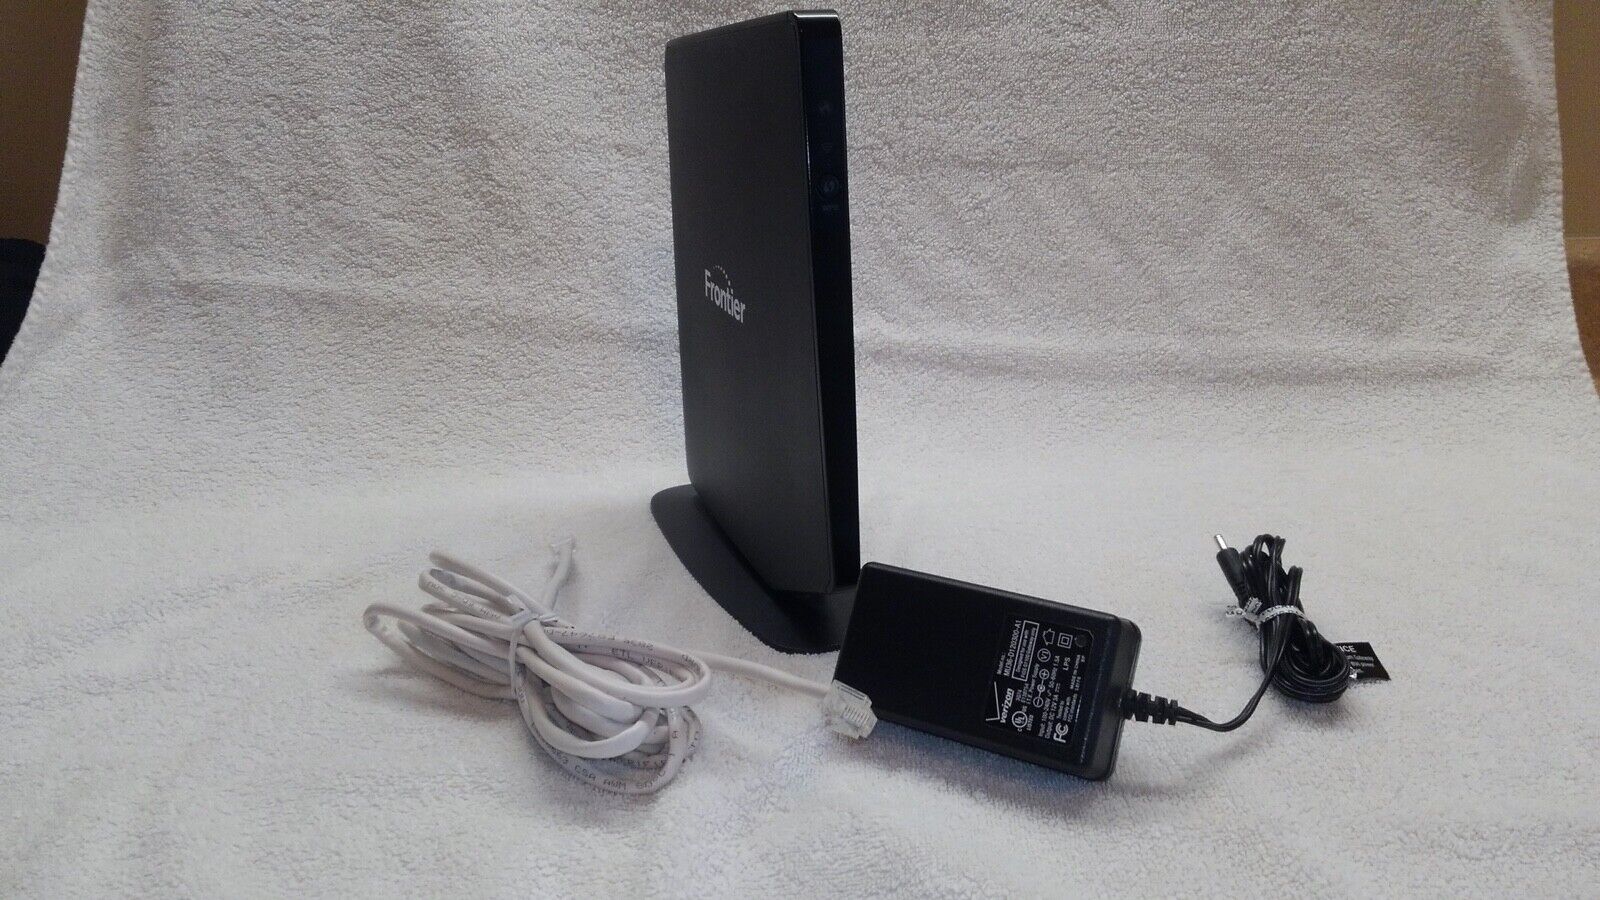 FiOS -G1100 Wireless Router